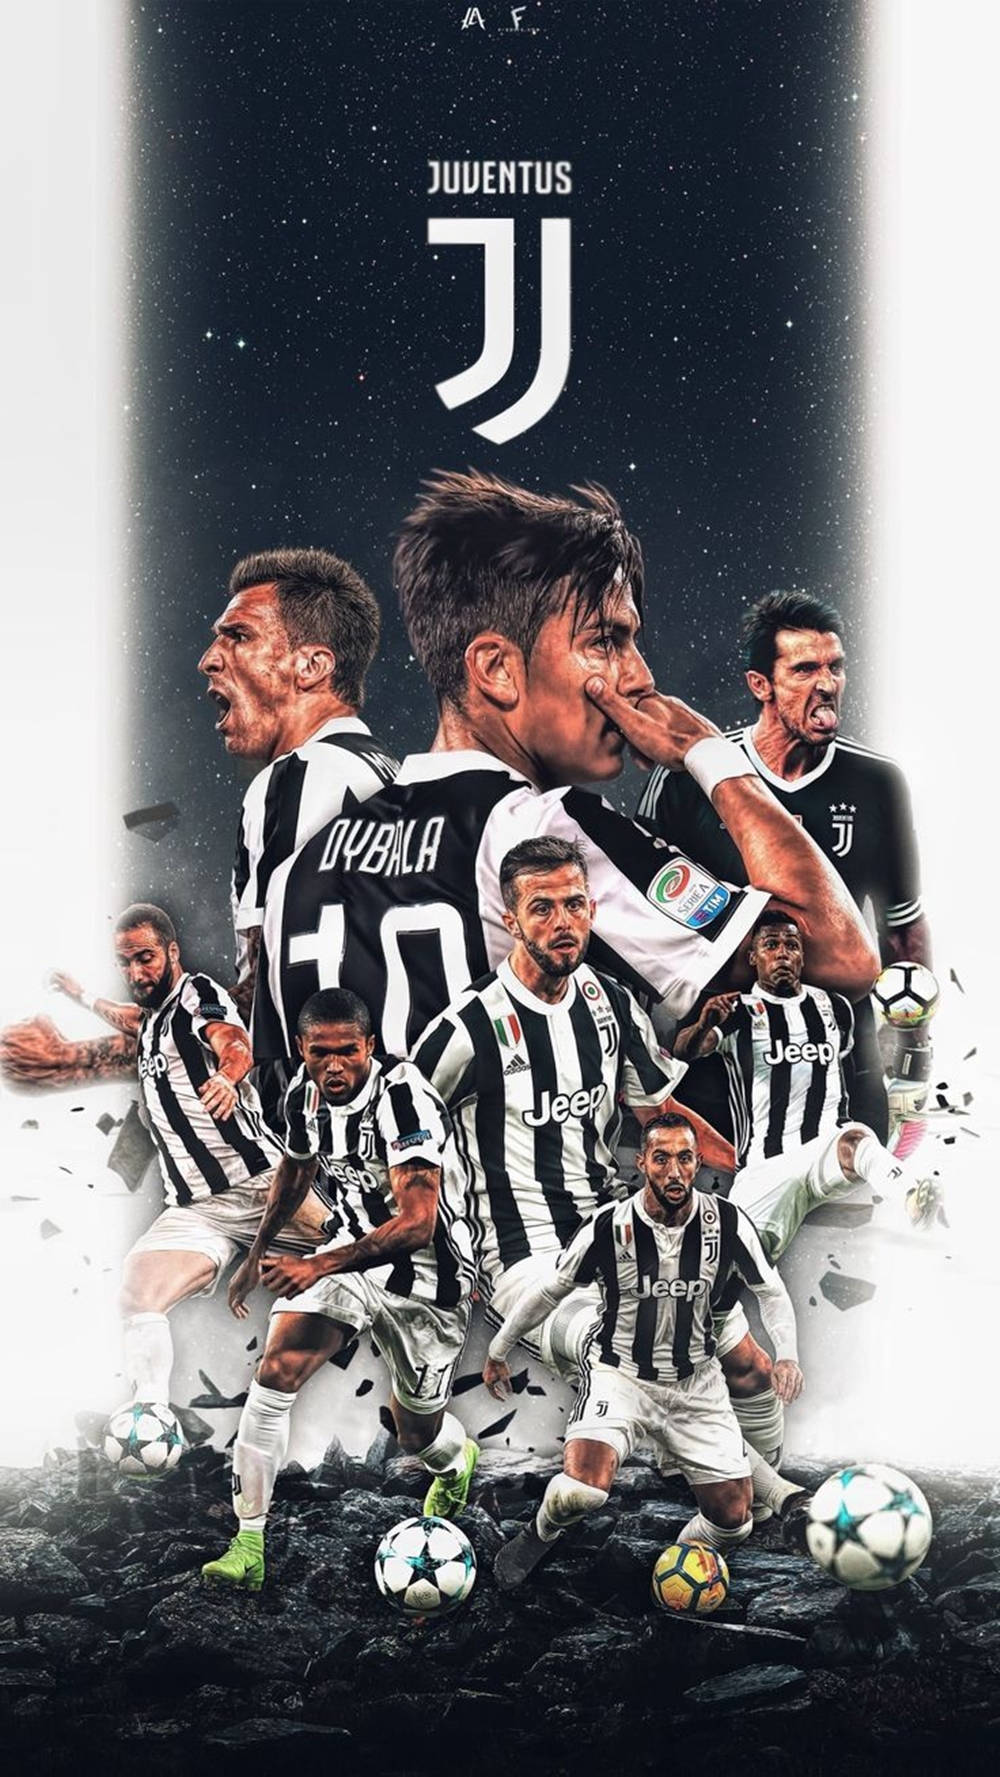 Download Juventus Football Club Poster | Wallpapers.com